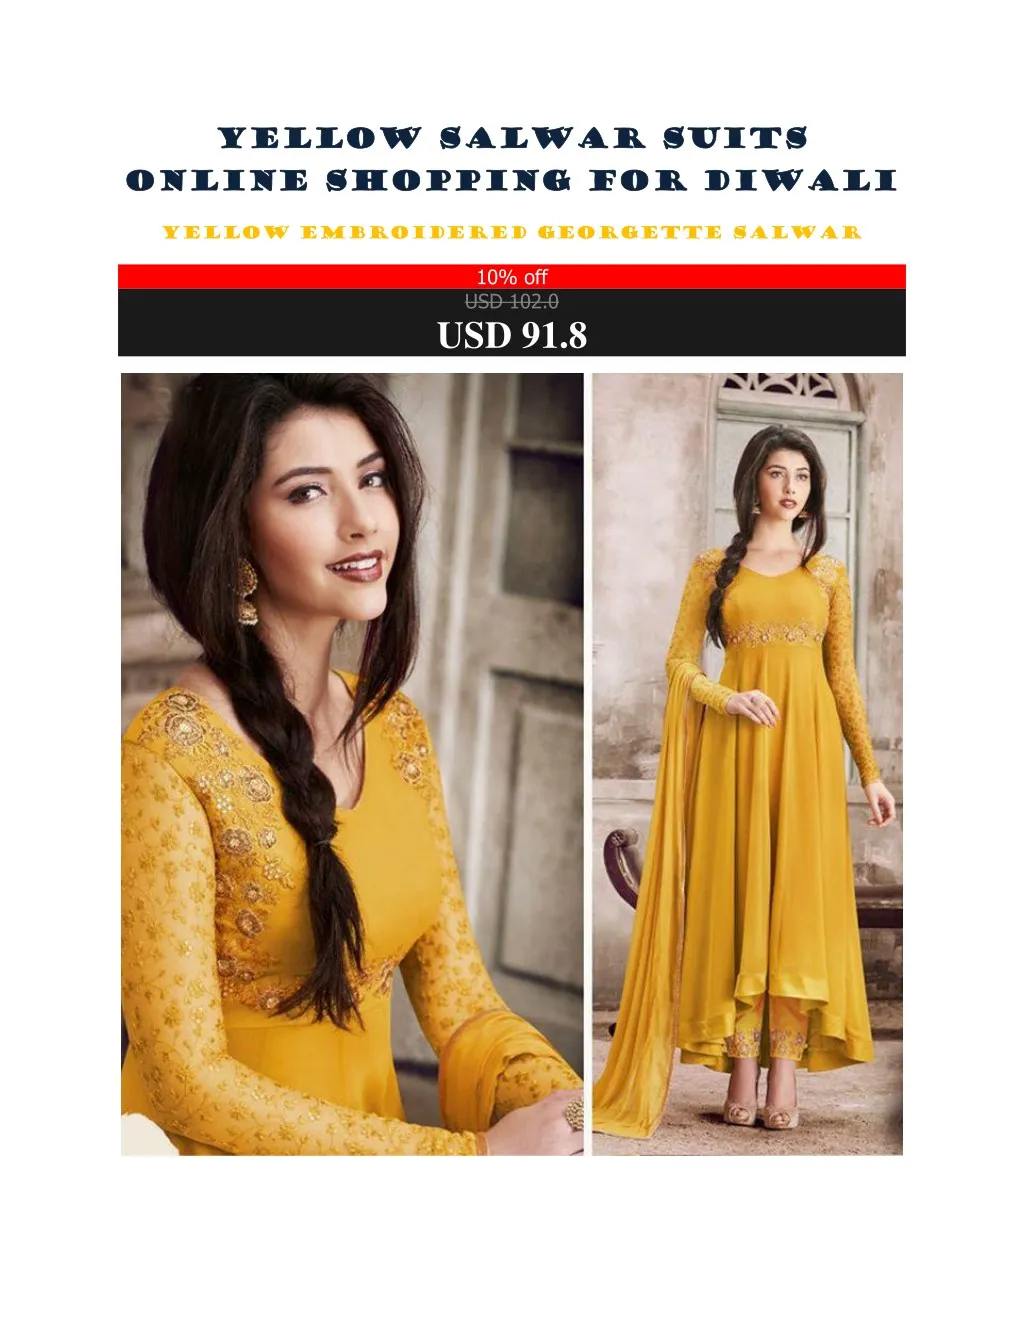 yellow salwar suits yellow salwar suits online